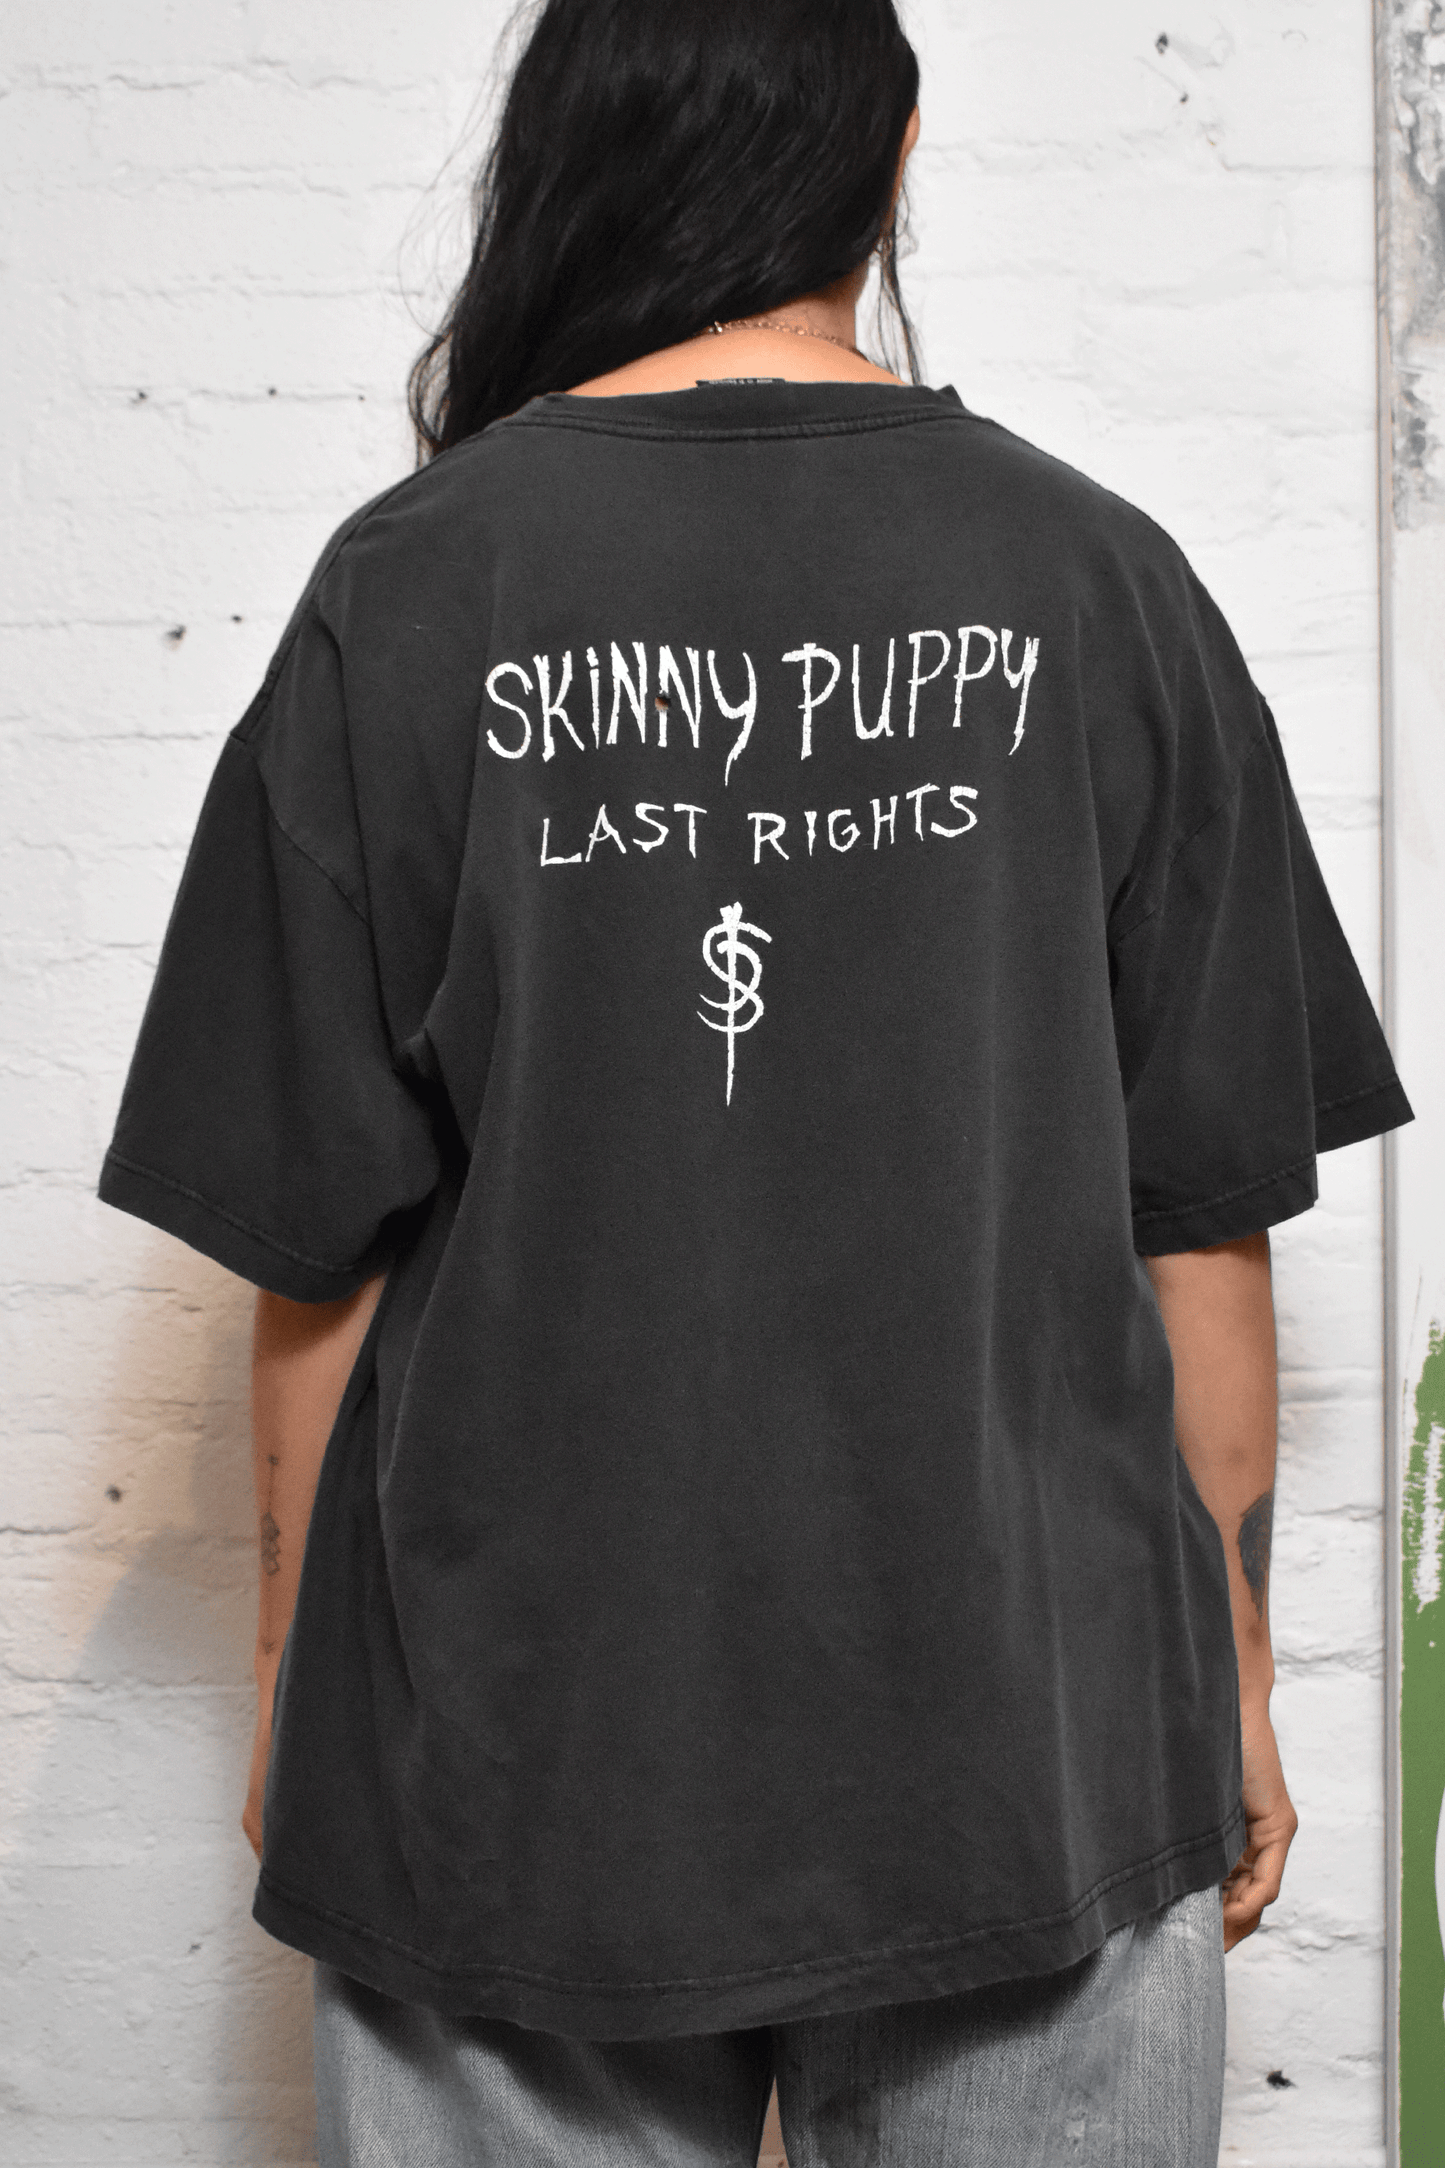 Vintage 1992 "Skinny Puppy" Tour T-shirt